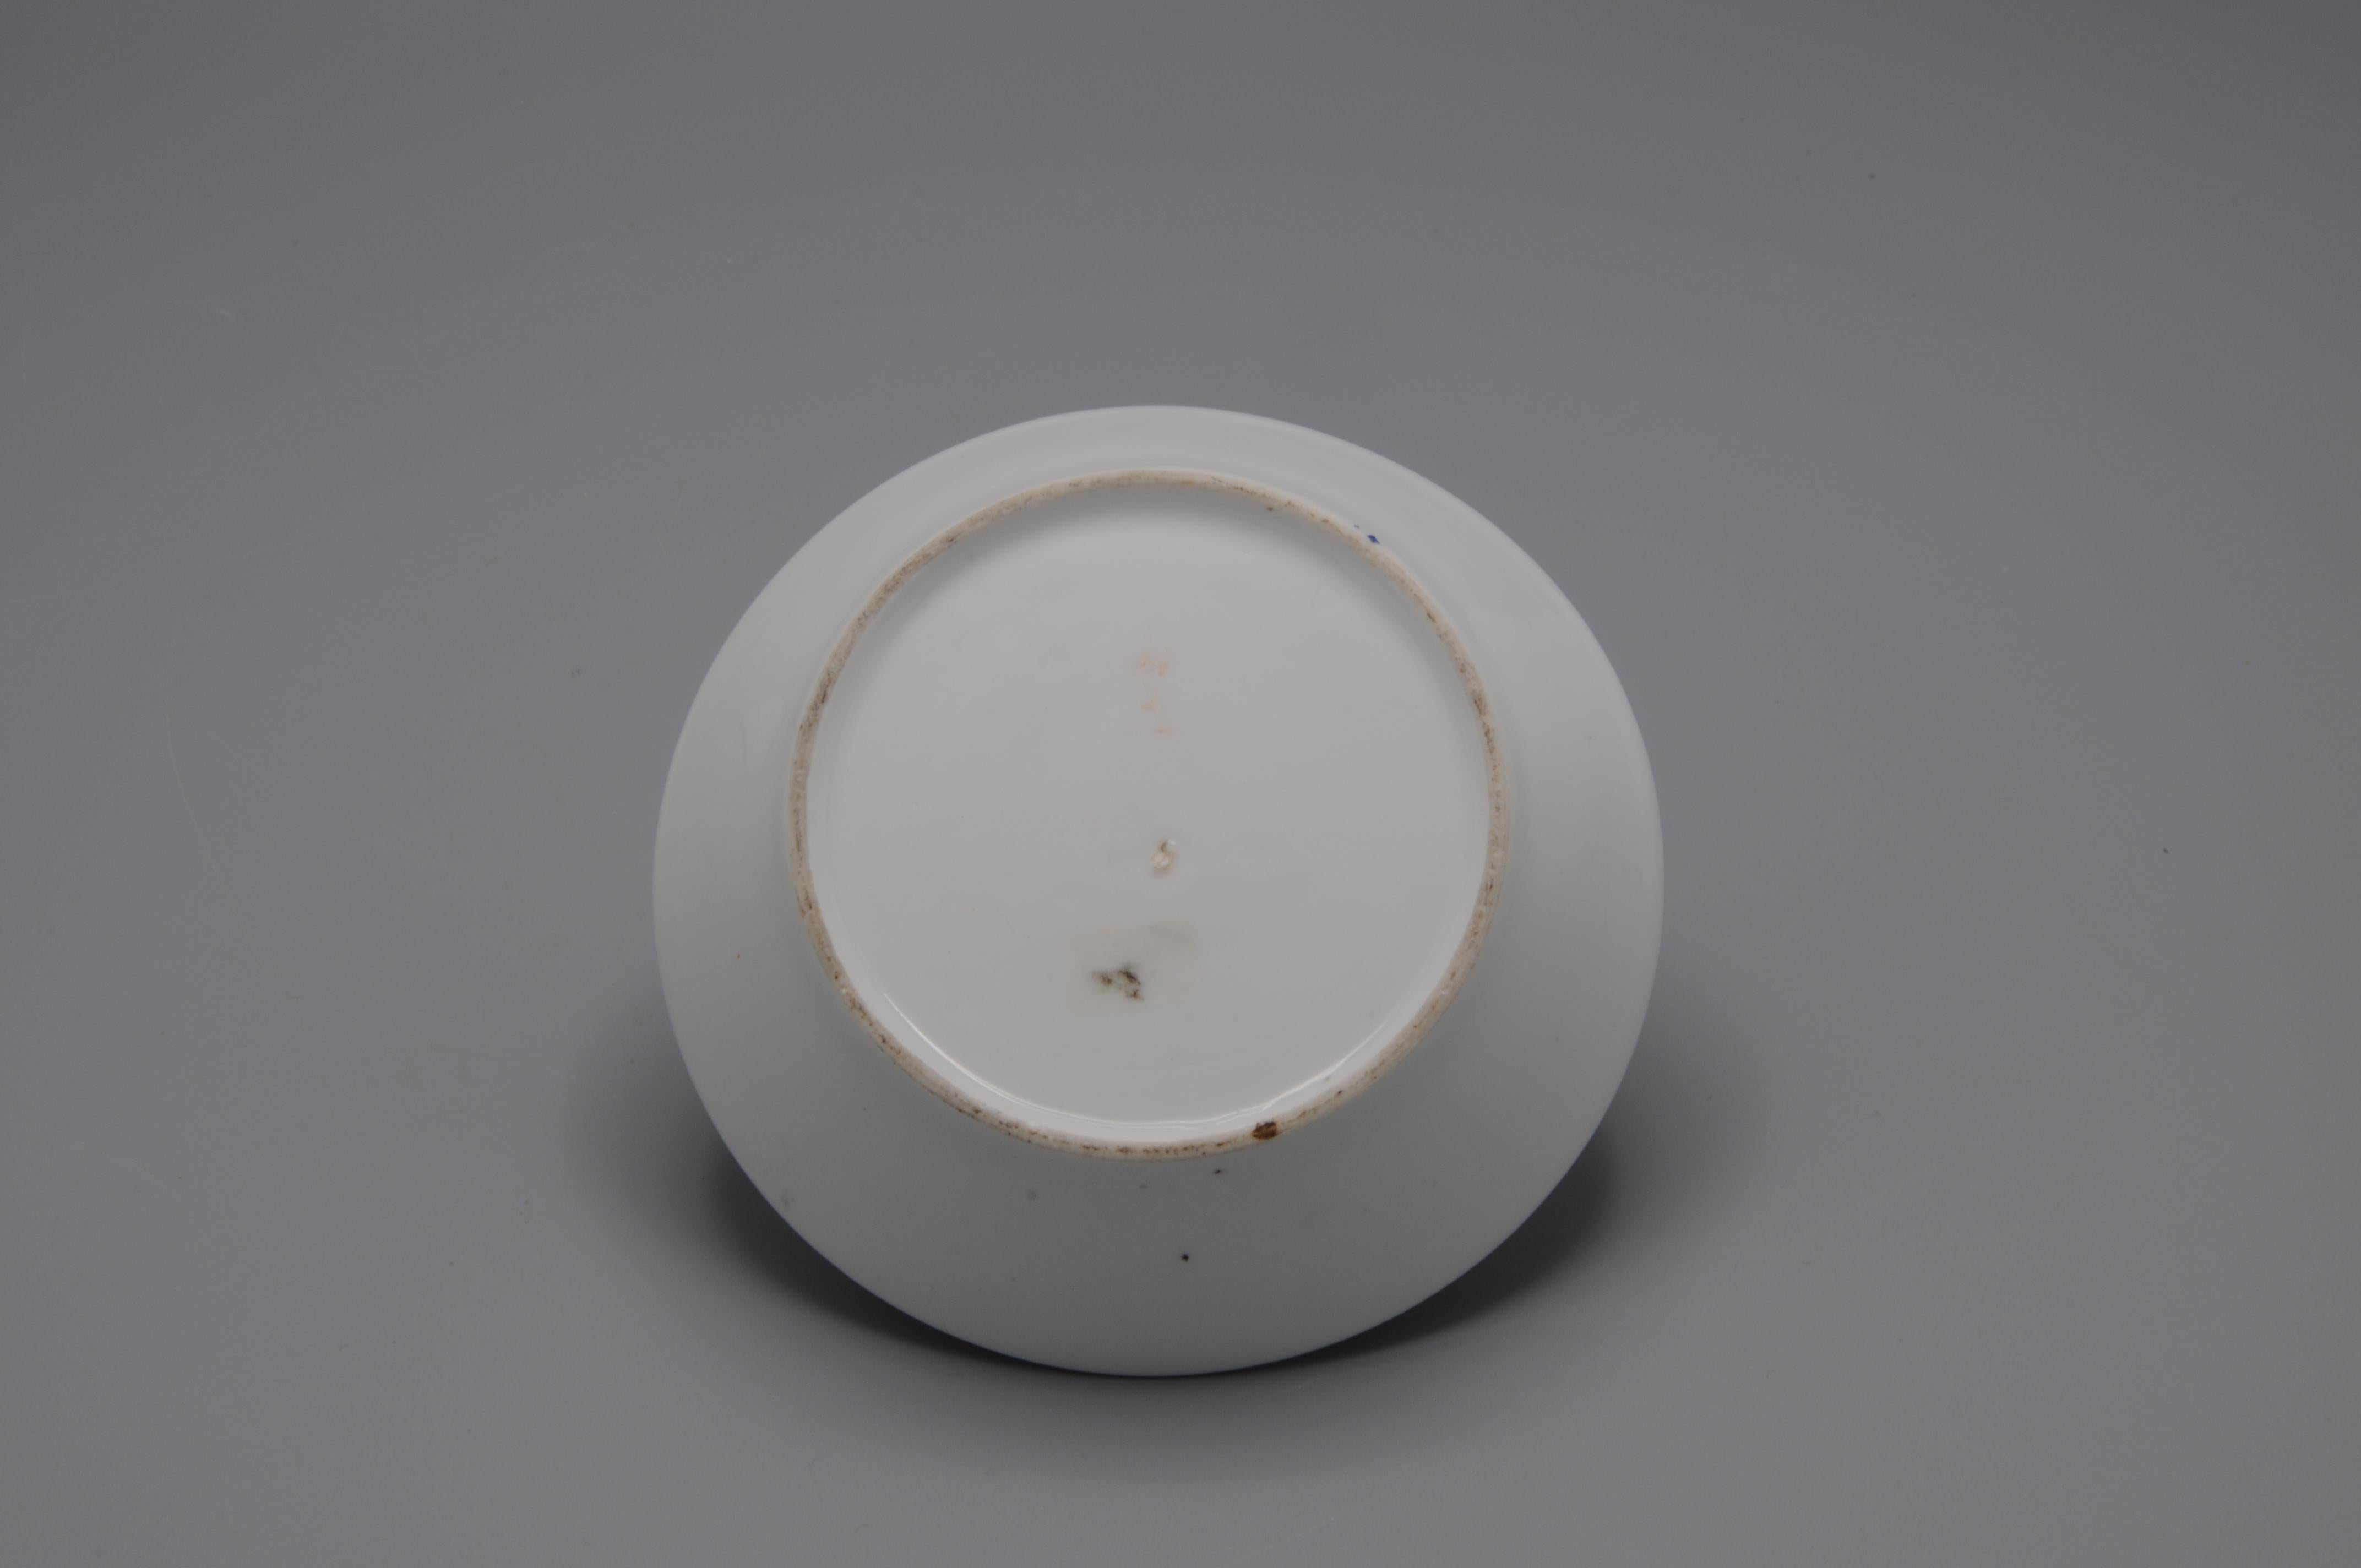 Porcelain André Leboeuf, Manufacture à la Reine' - Cup and saucer 'Litron', late 18th For Sale